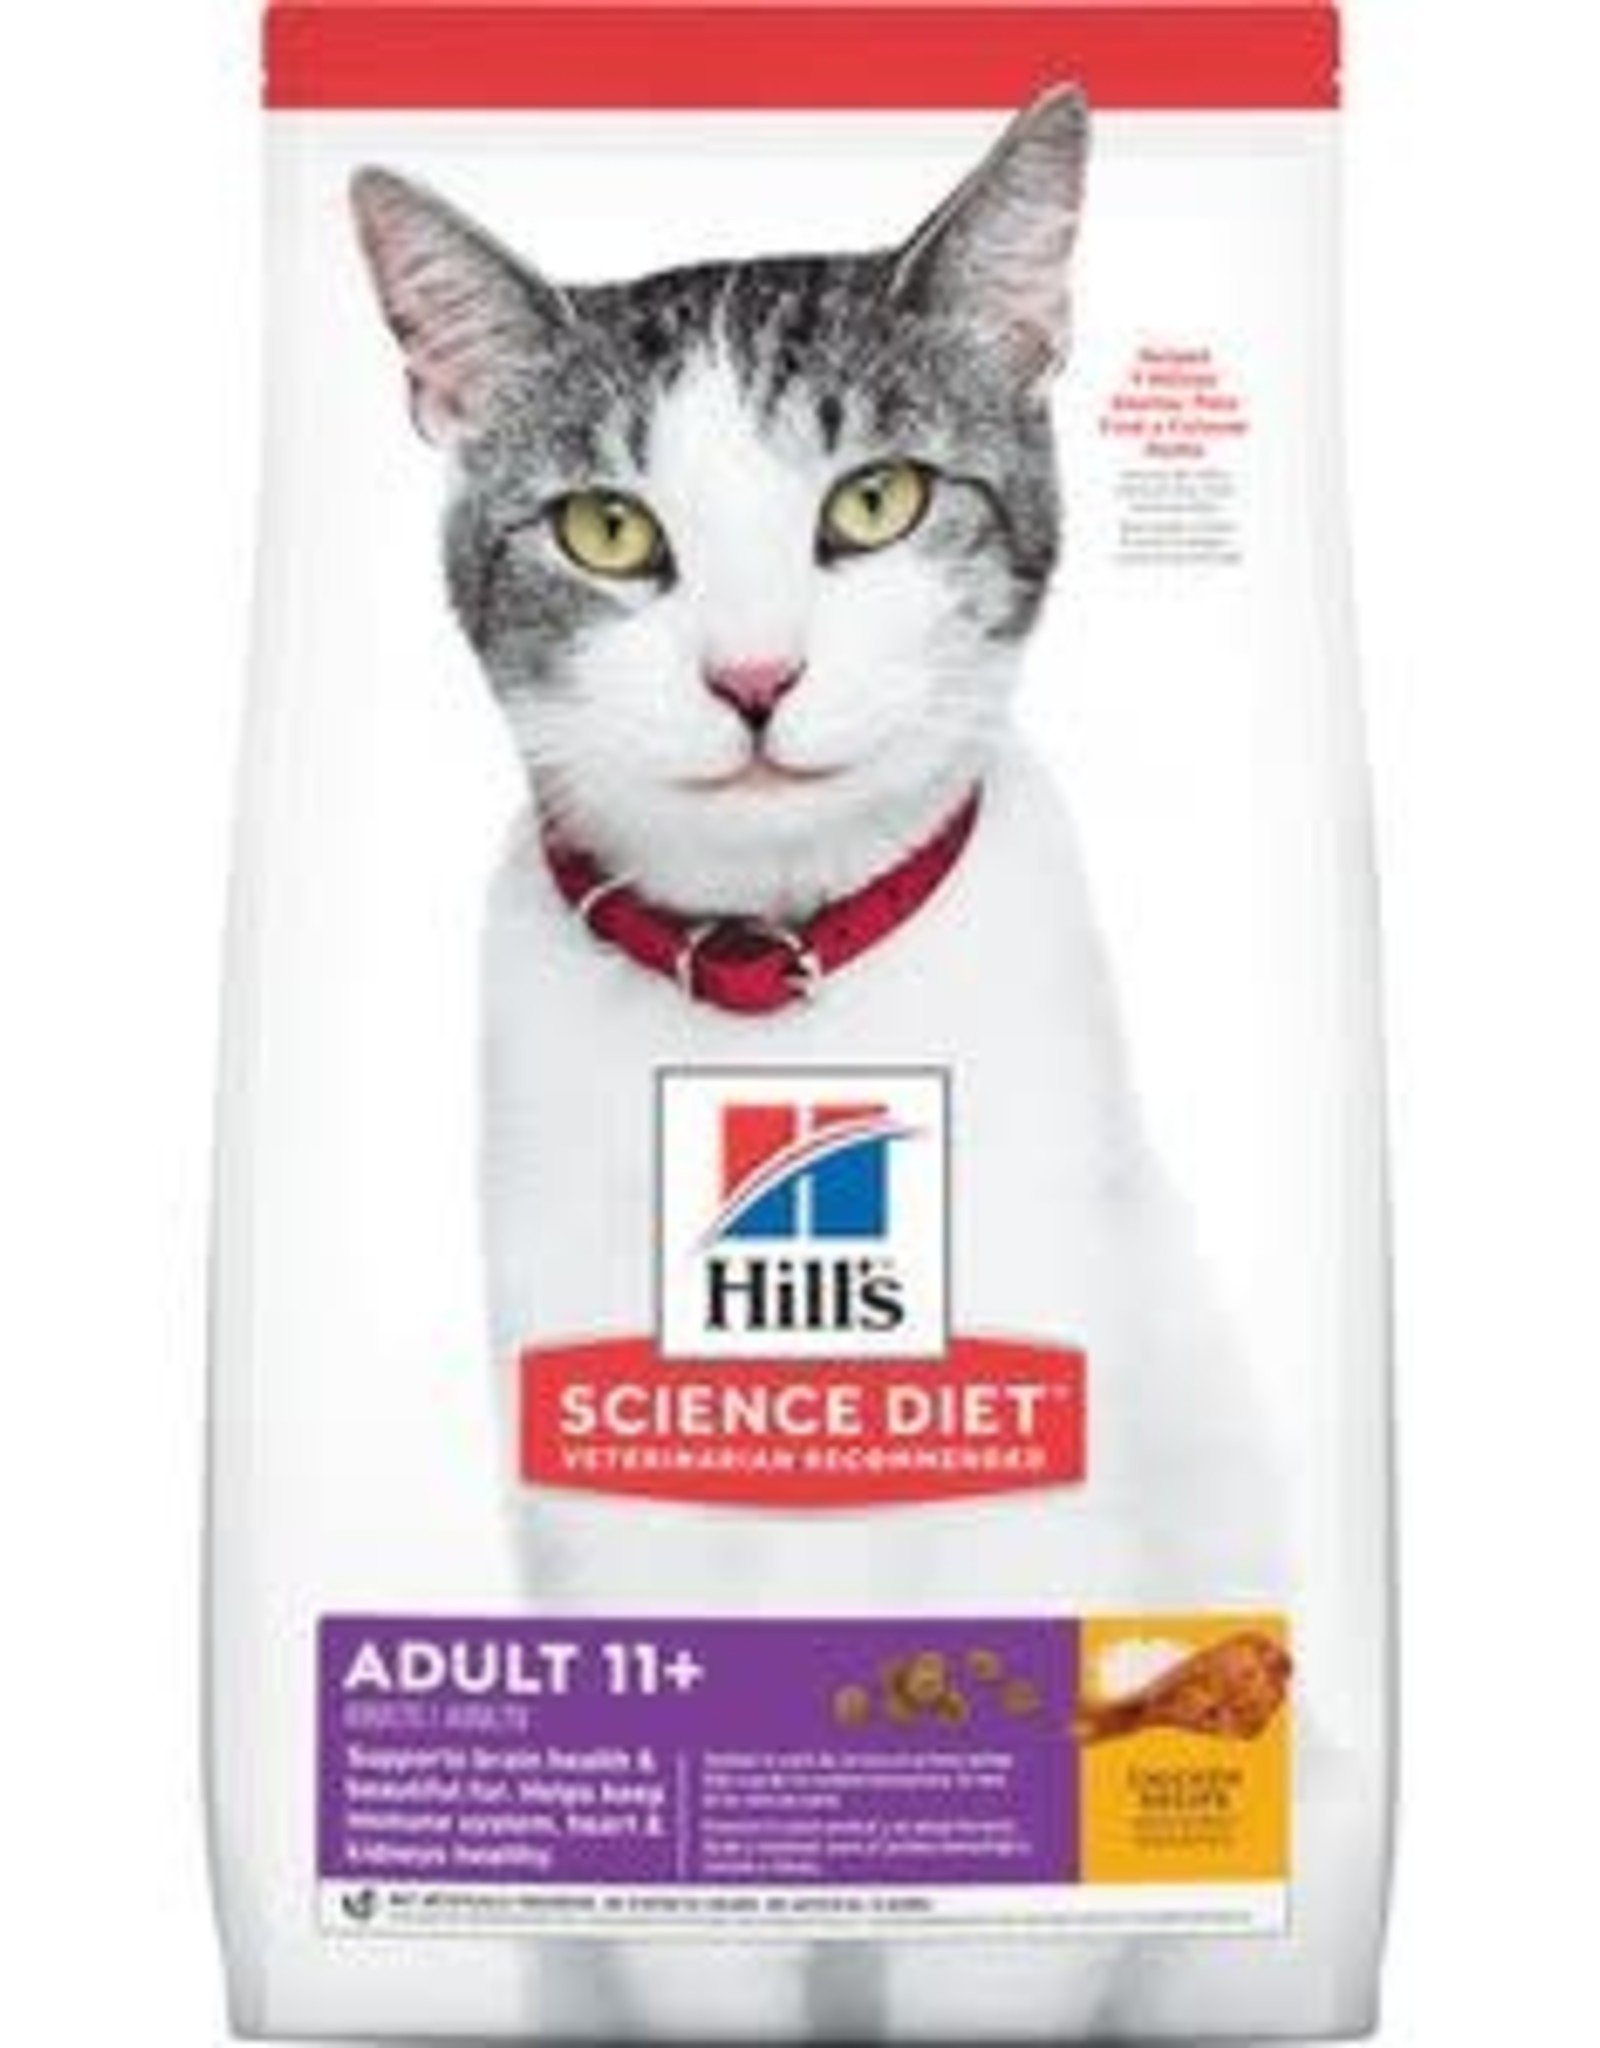 Hill's Science Diet Hill's SD Feline  SENIOR 11+, 3.5lbs